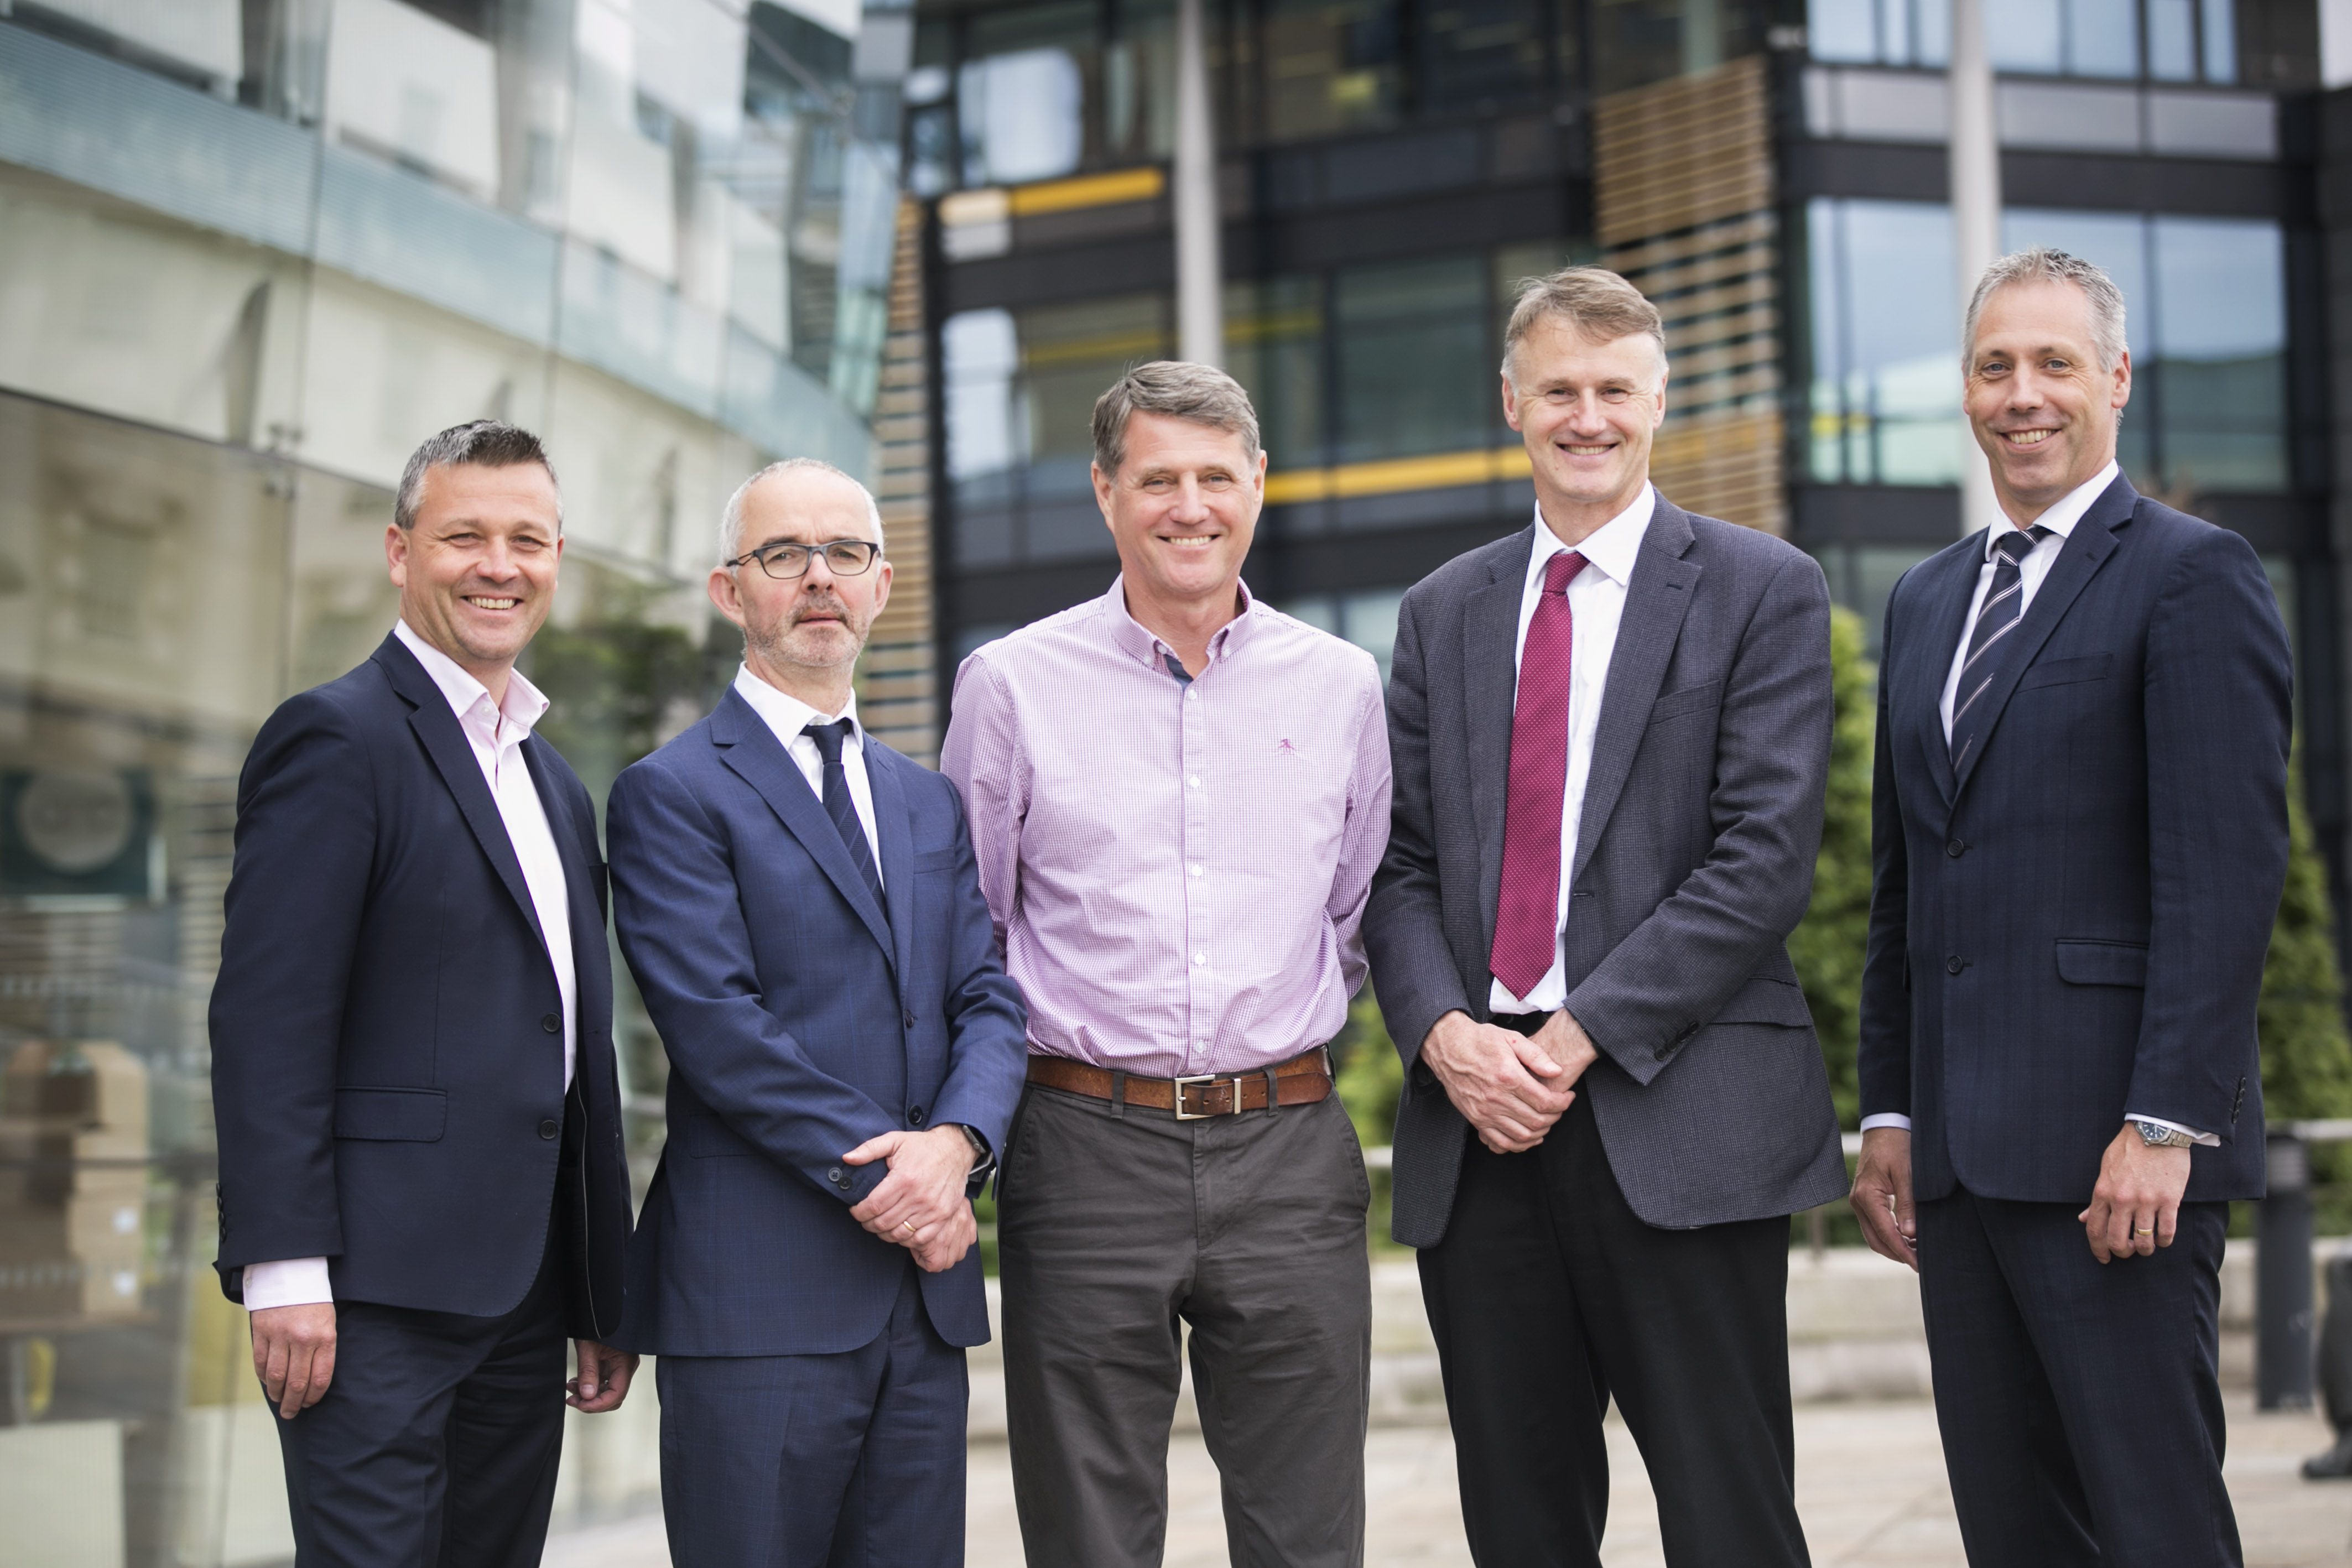 From left: Allen Martin, Partner, Kernel Capital; Stuart Harvey, CEO Datactics; Mick Foster, COO, Datactics; William McCulla, Director Corporate Finance, Invest NI & Gavin Kennedy, Head of Business Banking NI, Bank of Ireland UK.